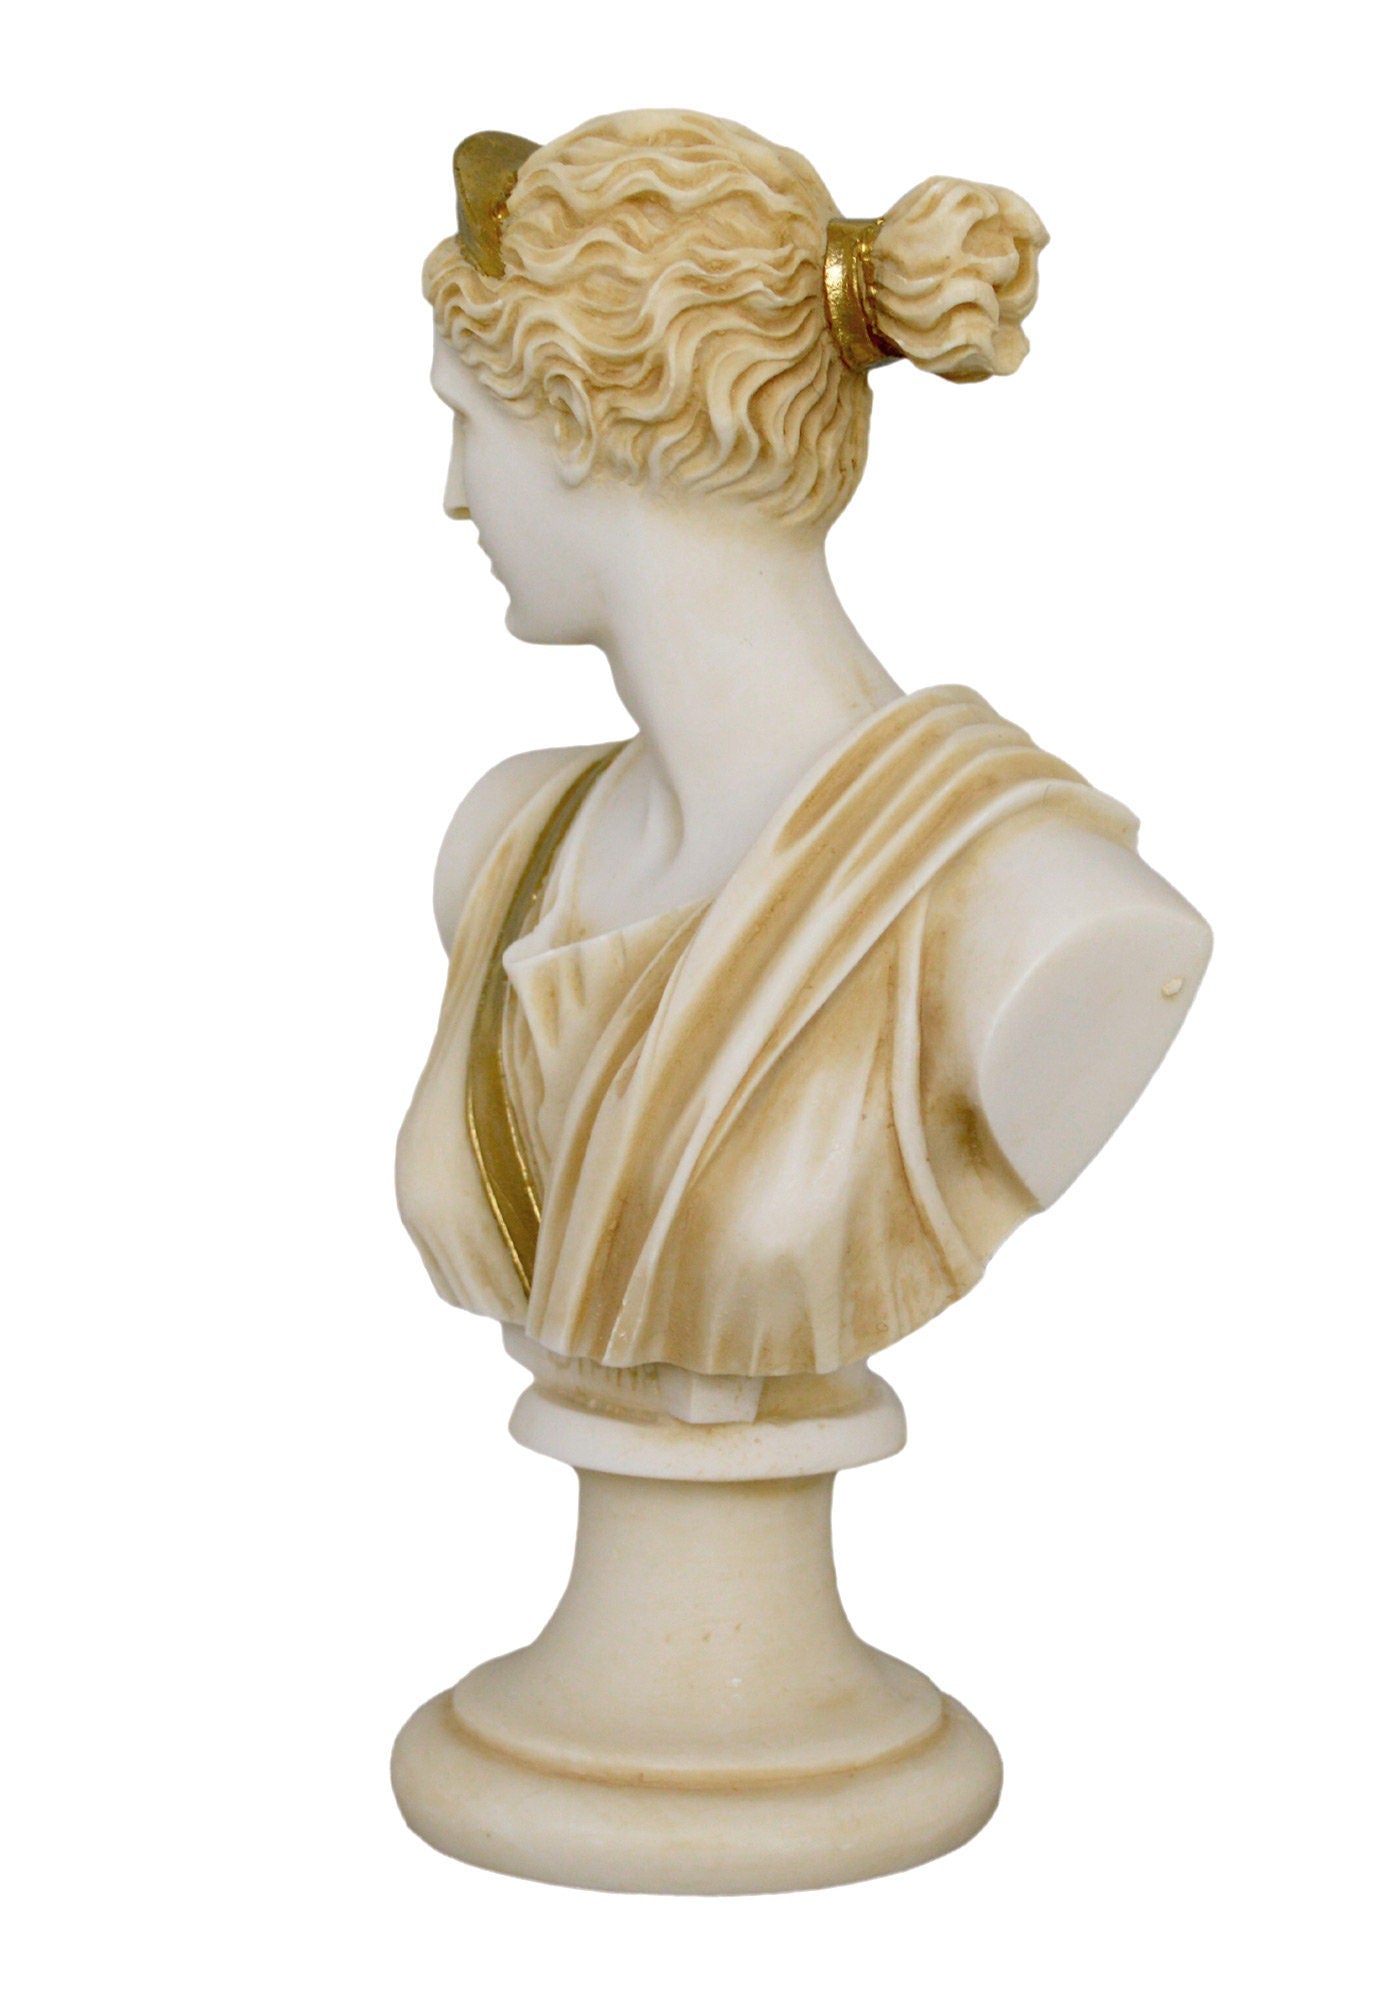 Artemis Diana - Greek Roman goddess of Hunt, protector of Girls  - Small Aged Alabaster Bust